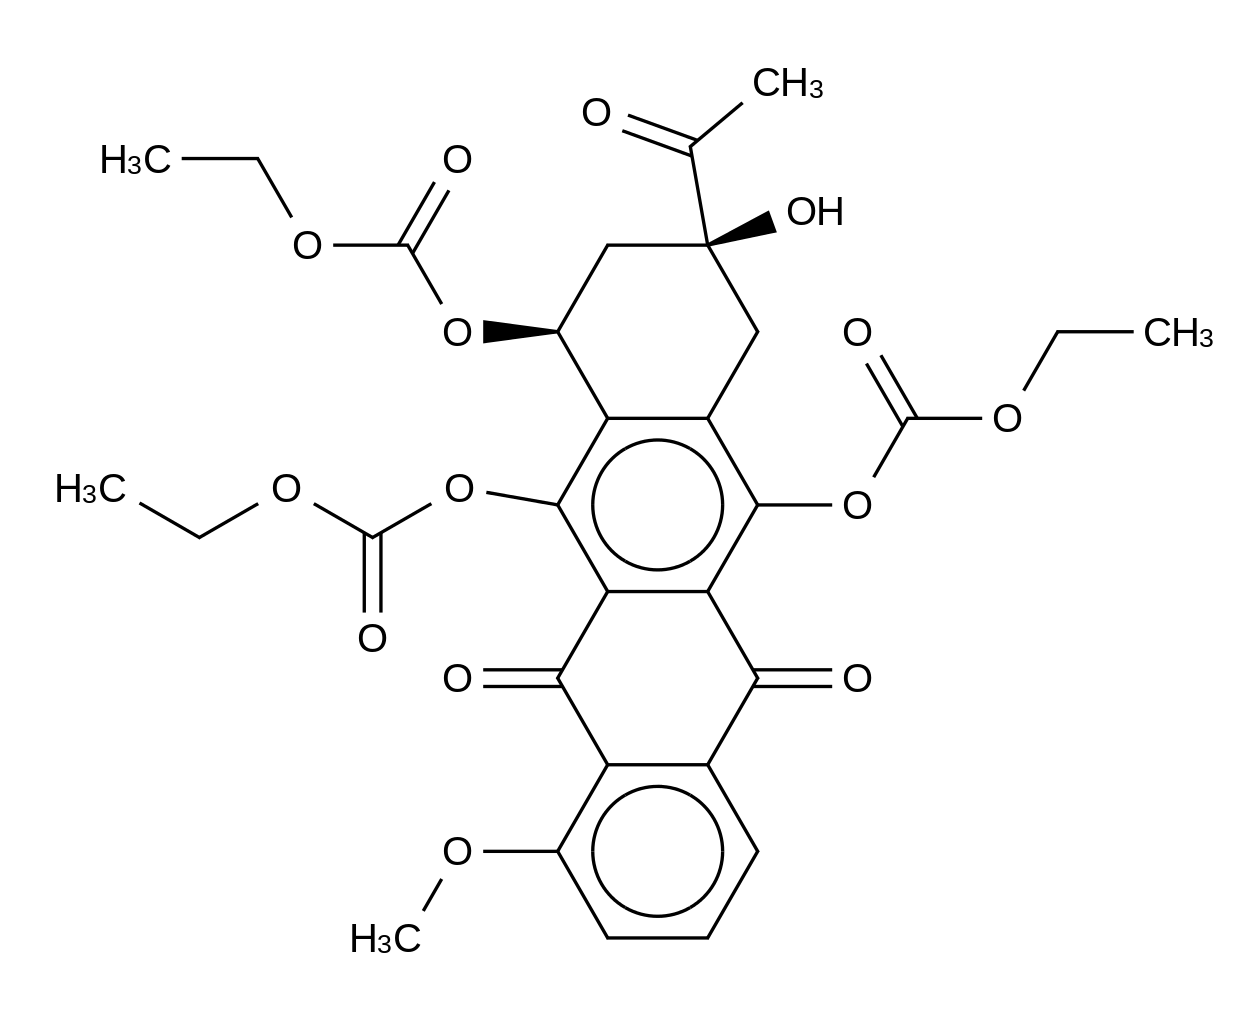 6,10,11-Triethylcarbonate Daunomycinone